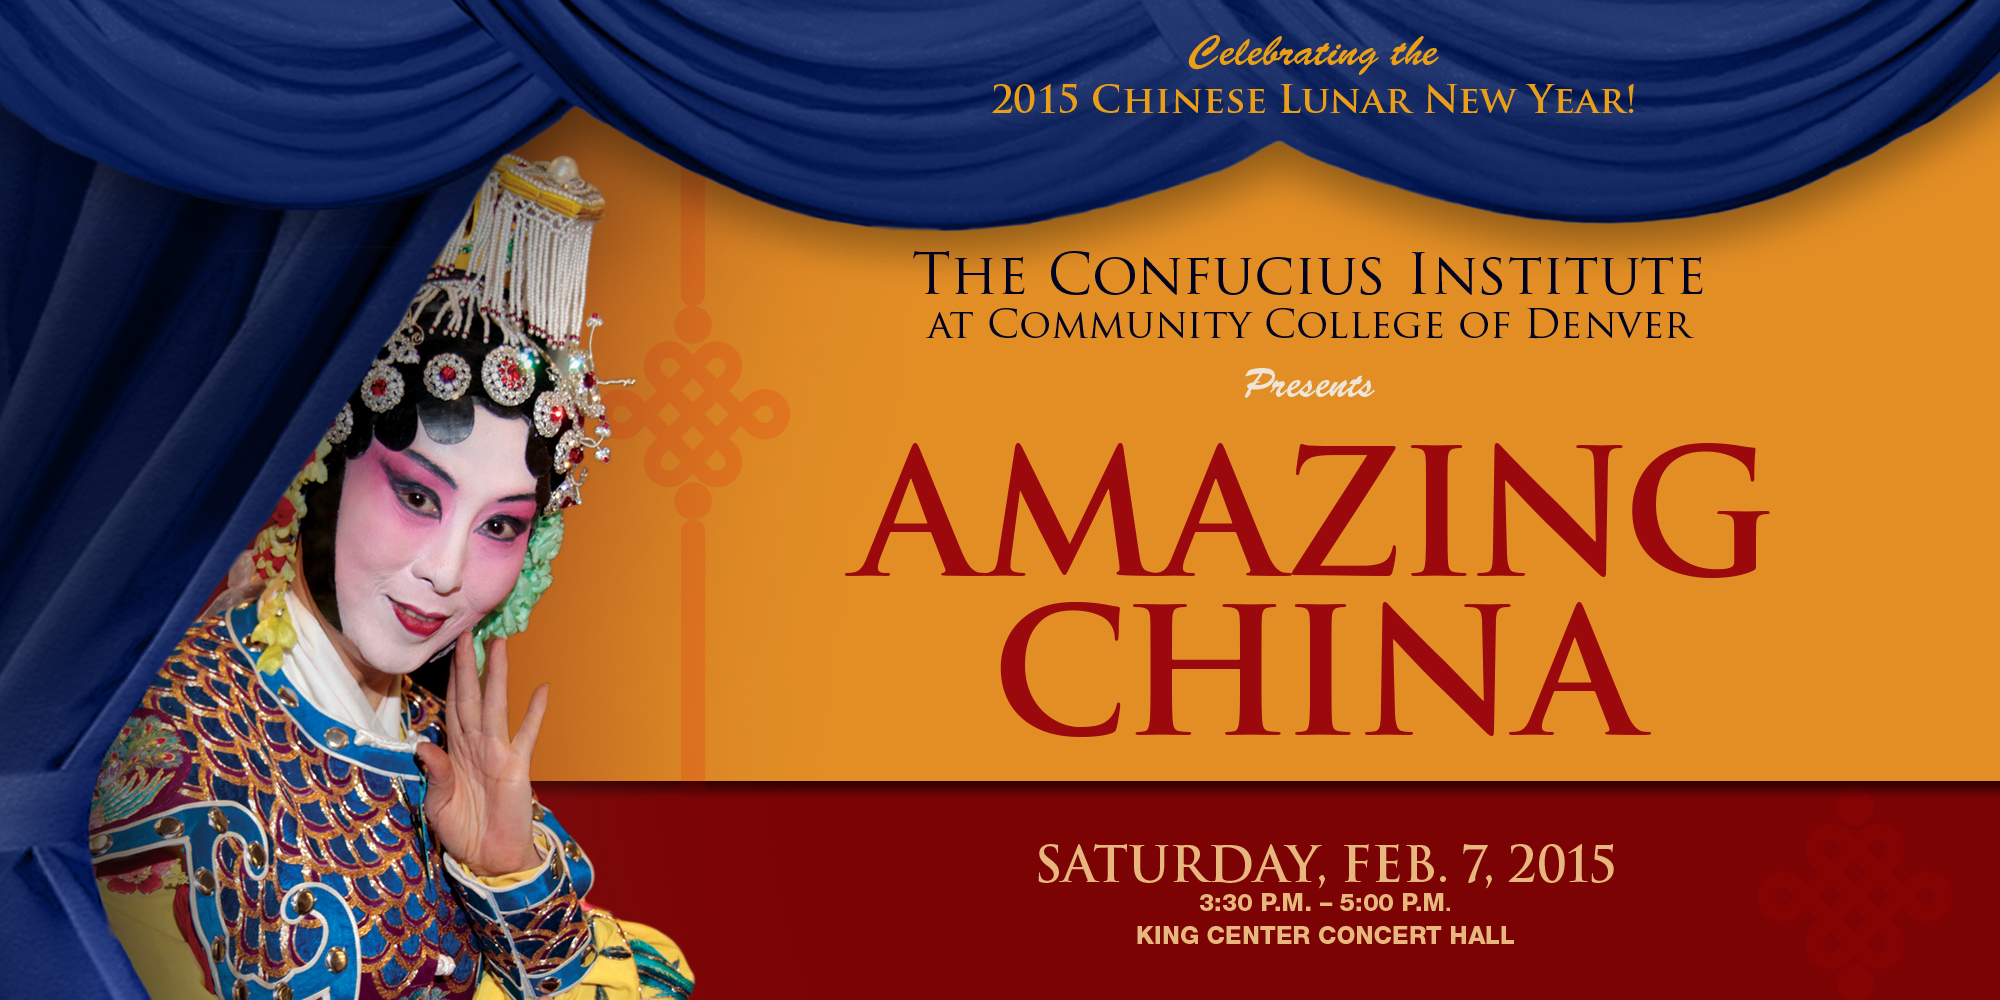 Confucius Institute Presents Amazing China, Saturday, February 7 at 3:30 p.m. in the King Center